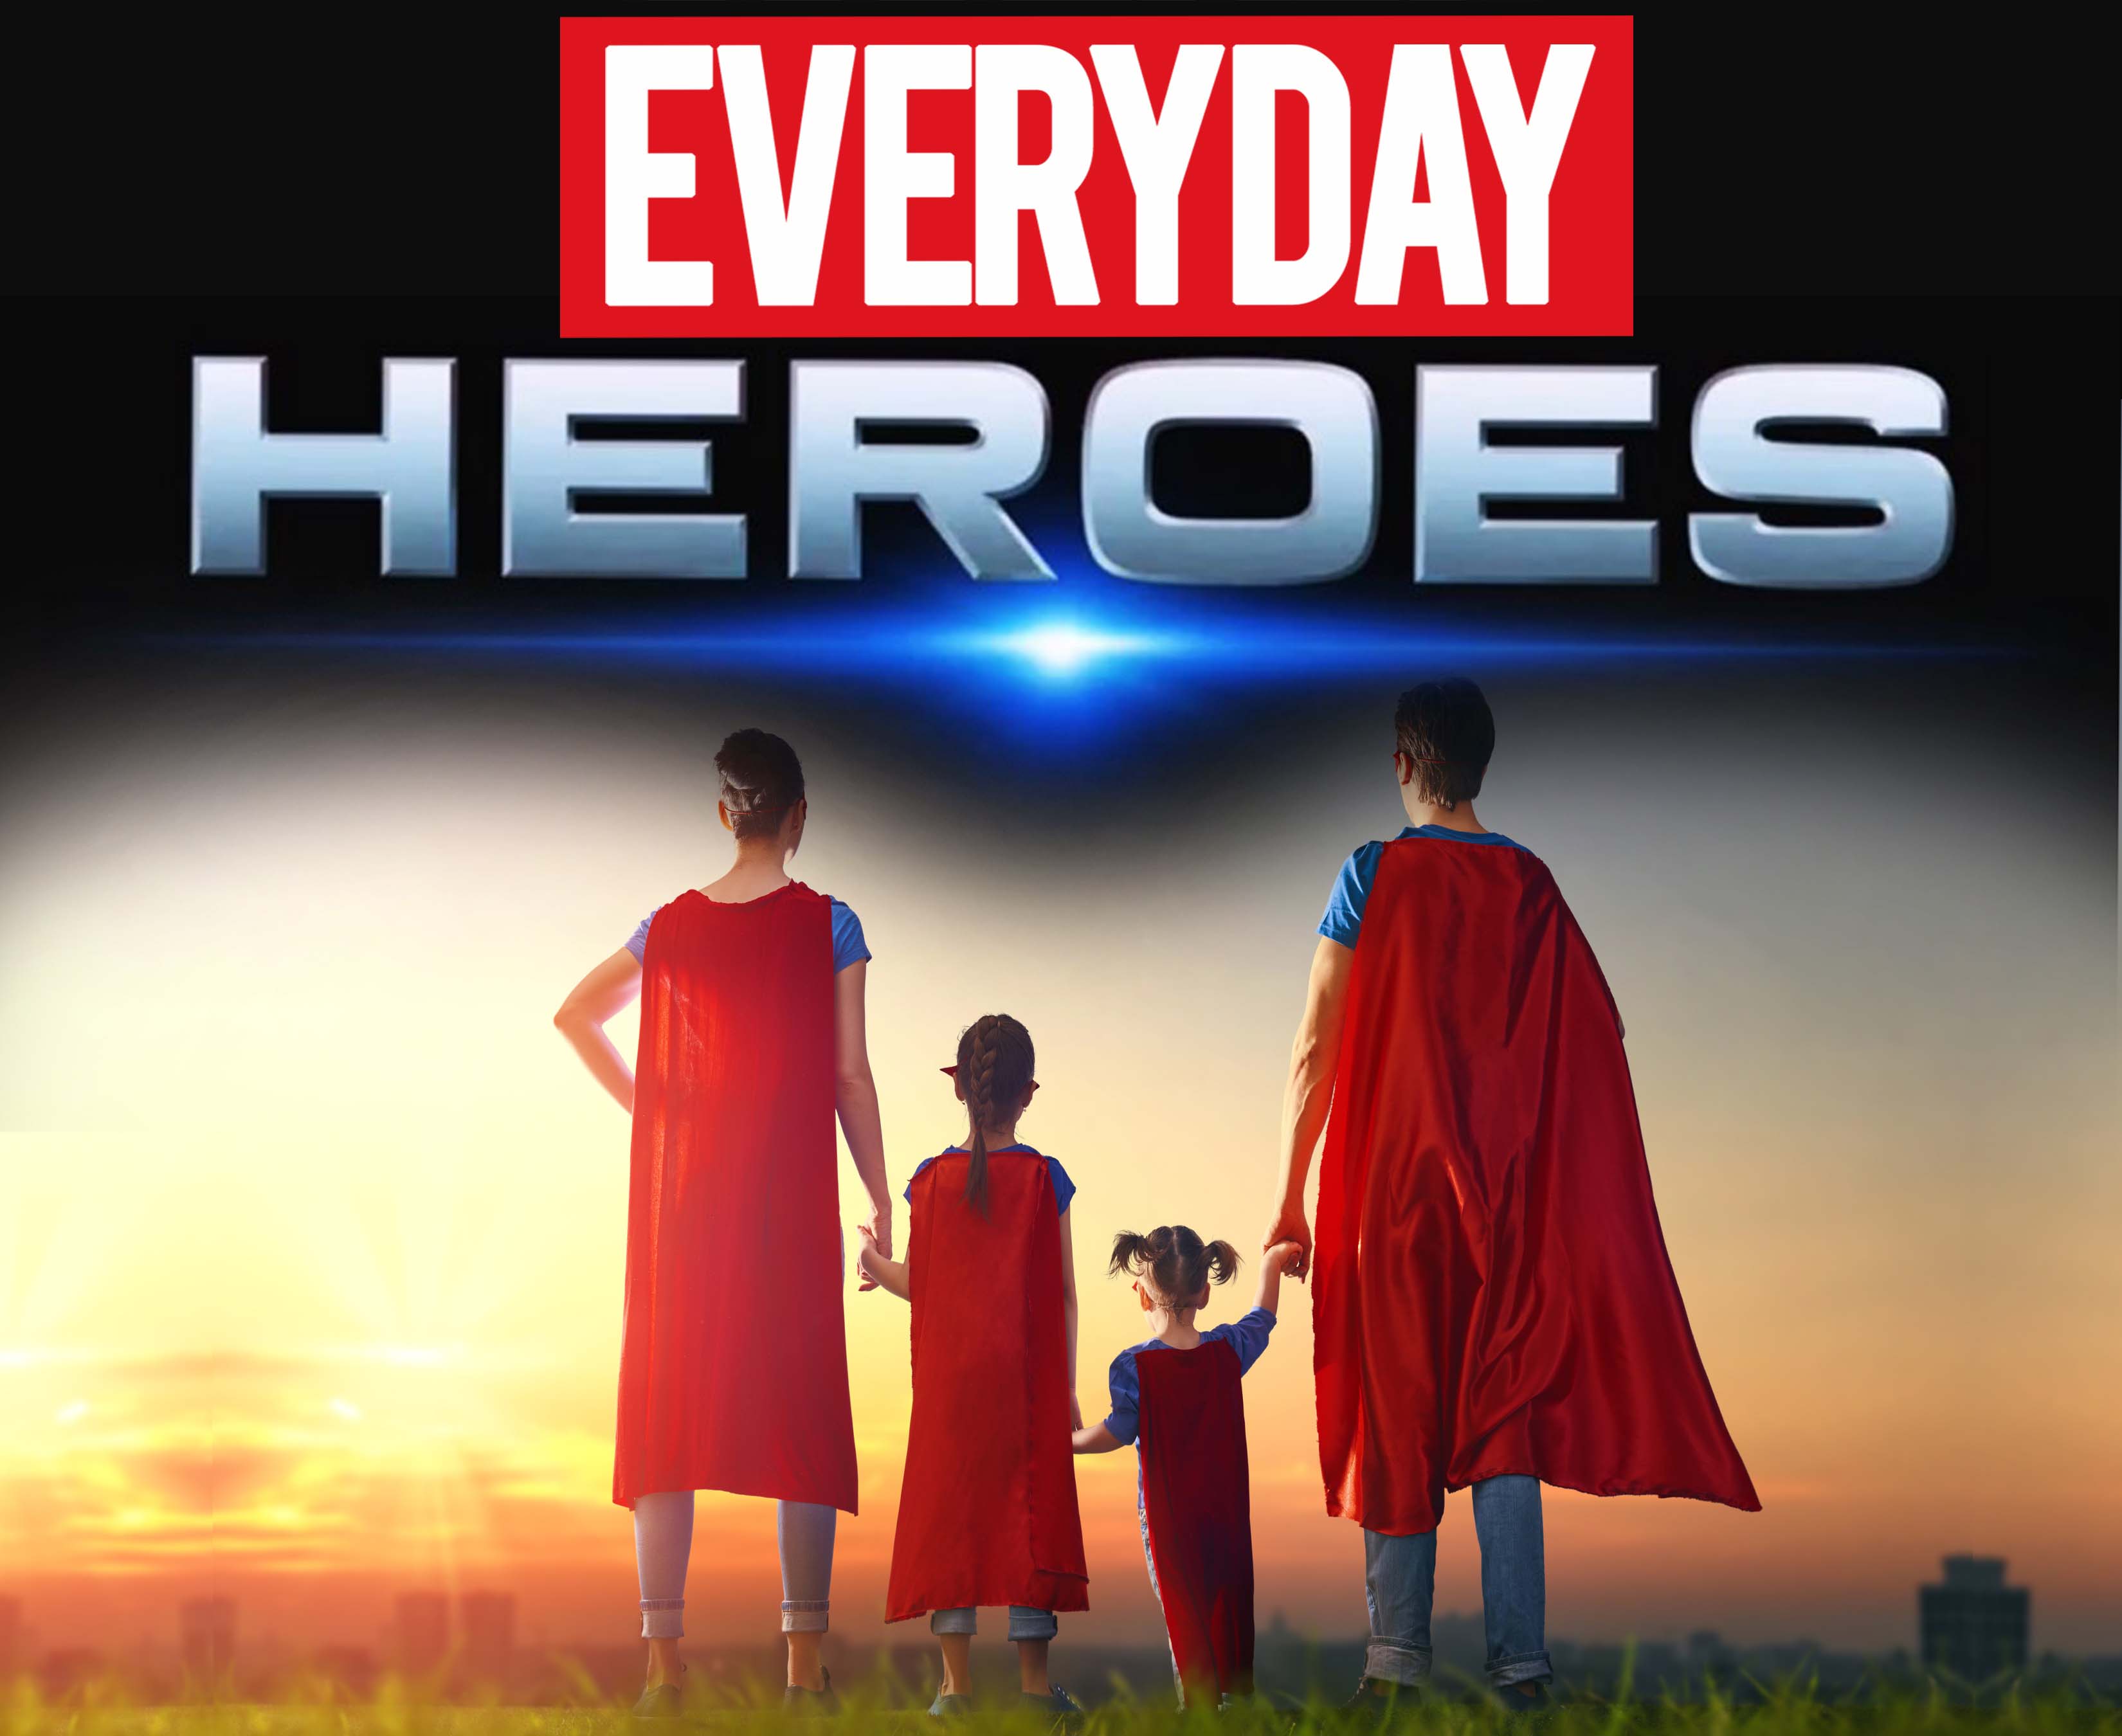 8-13-17 Everyday Heroes - Part 2